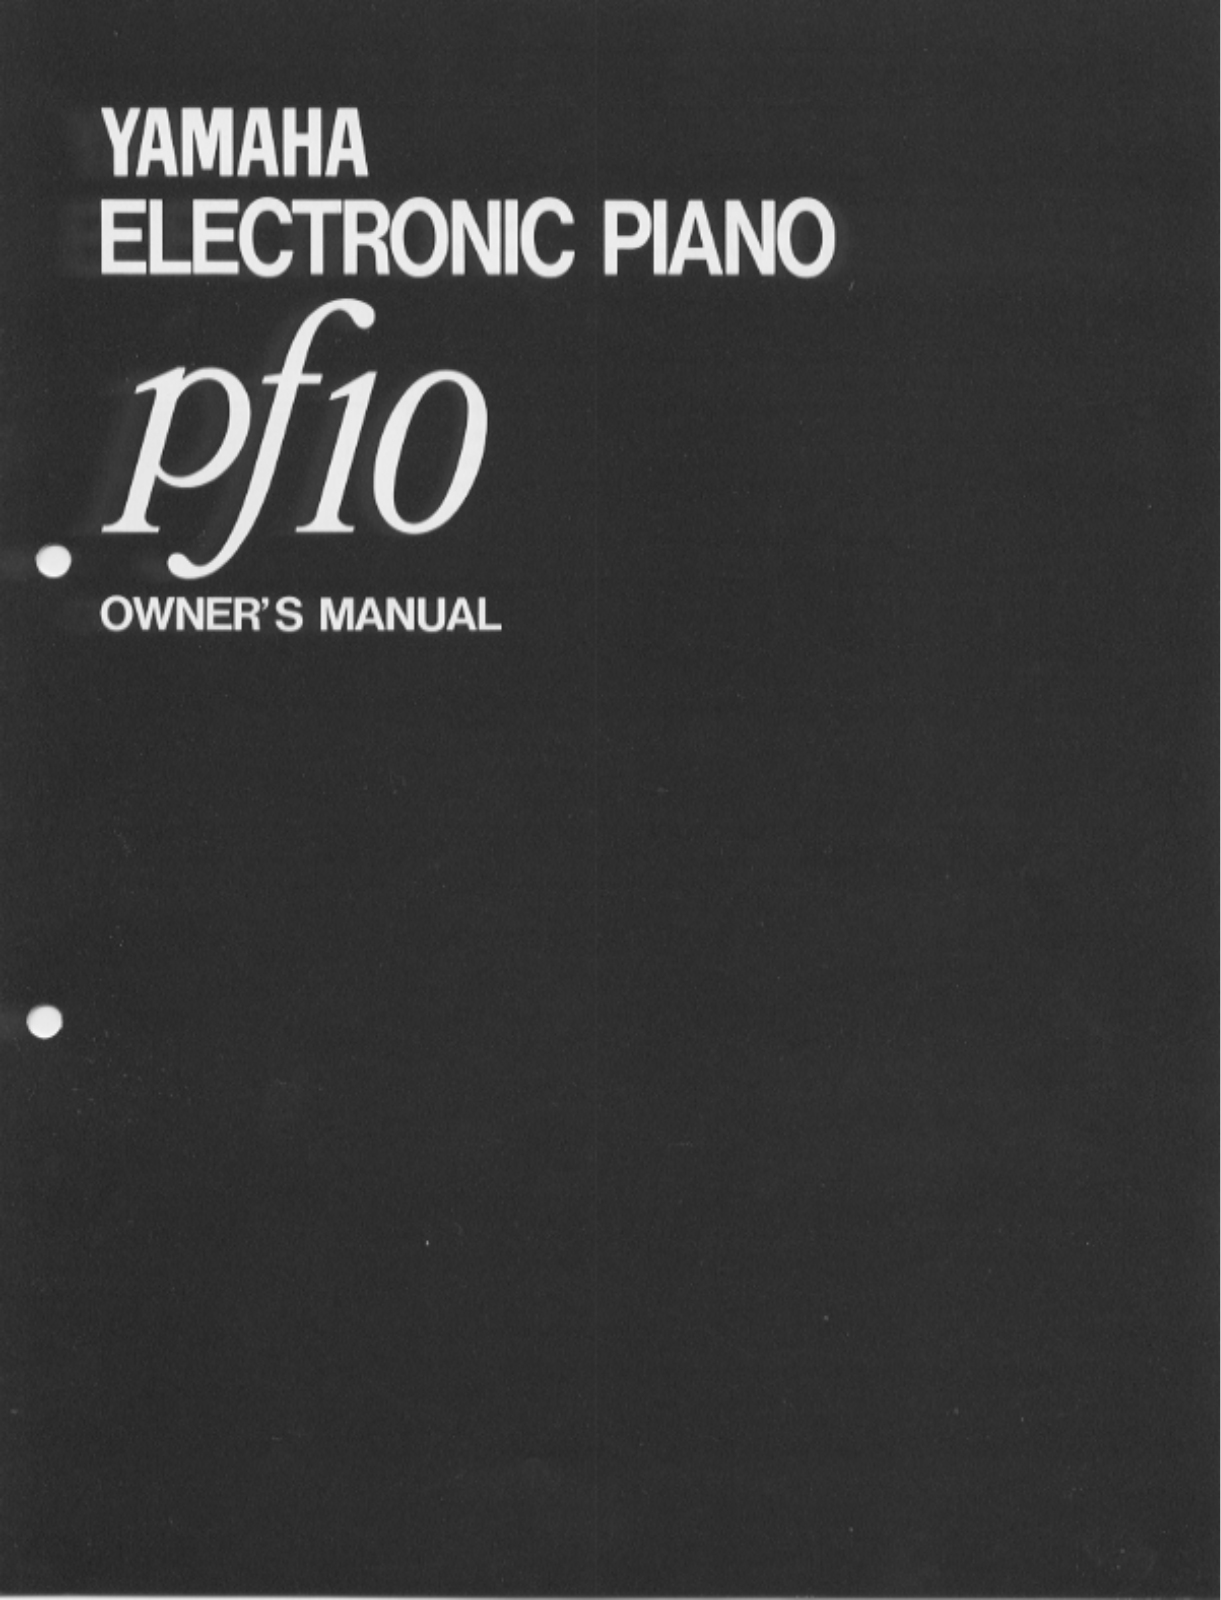 Yamaha pf10 User Manual